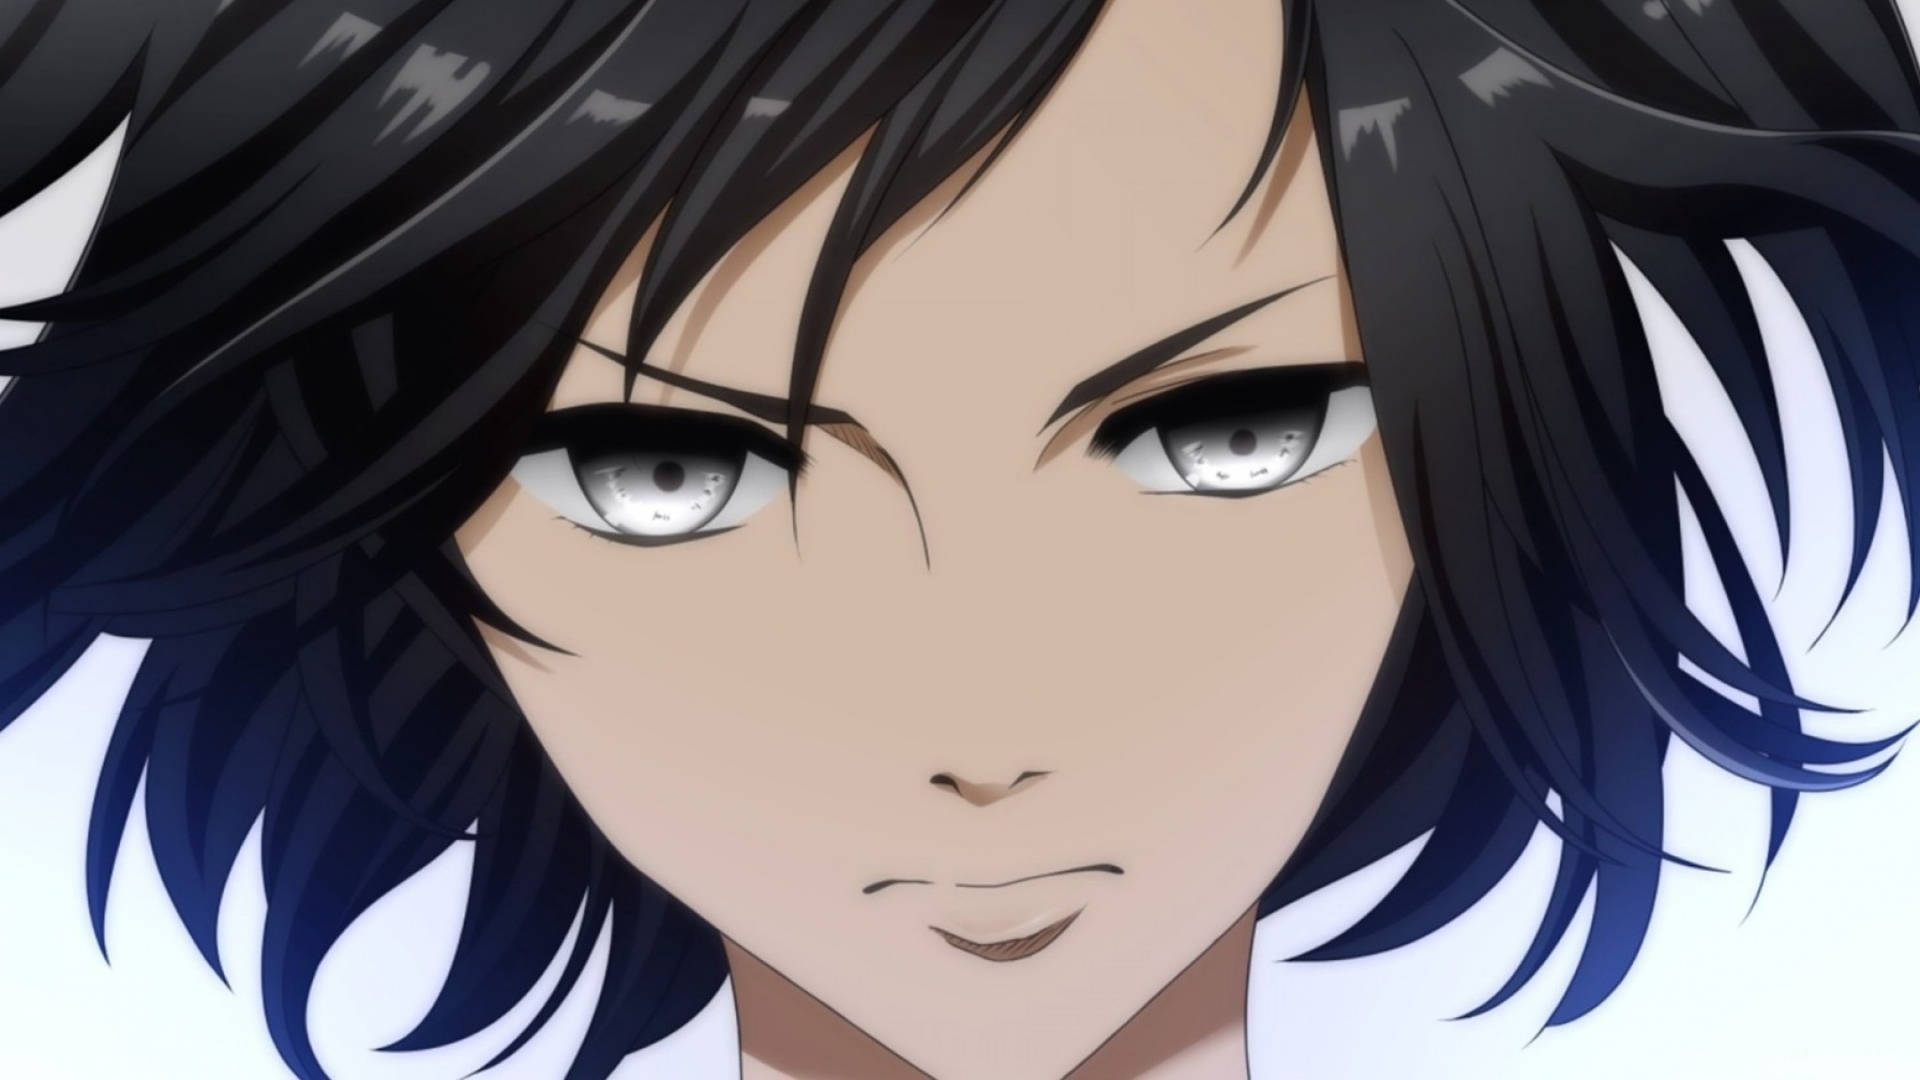 Mikasa Ackerman Face Closeup Background